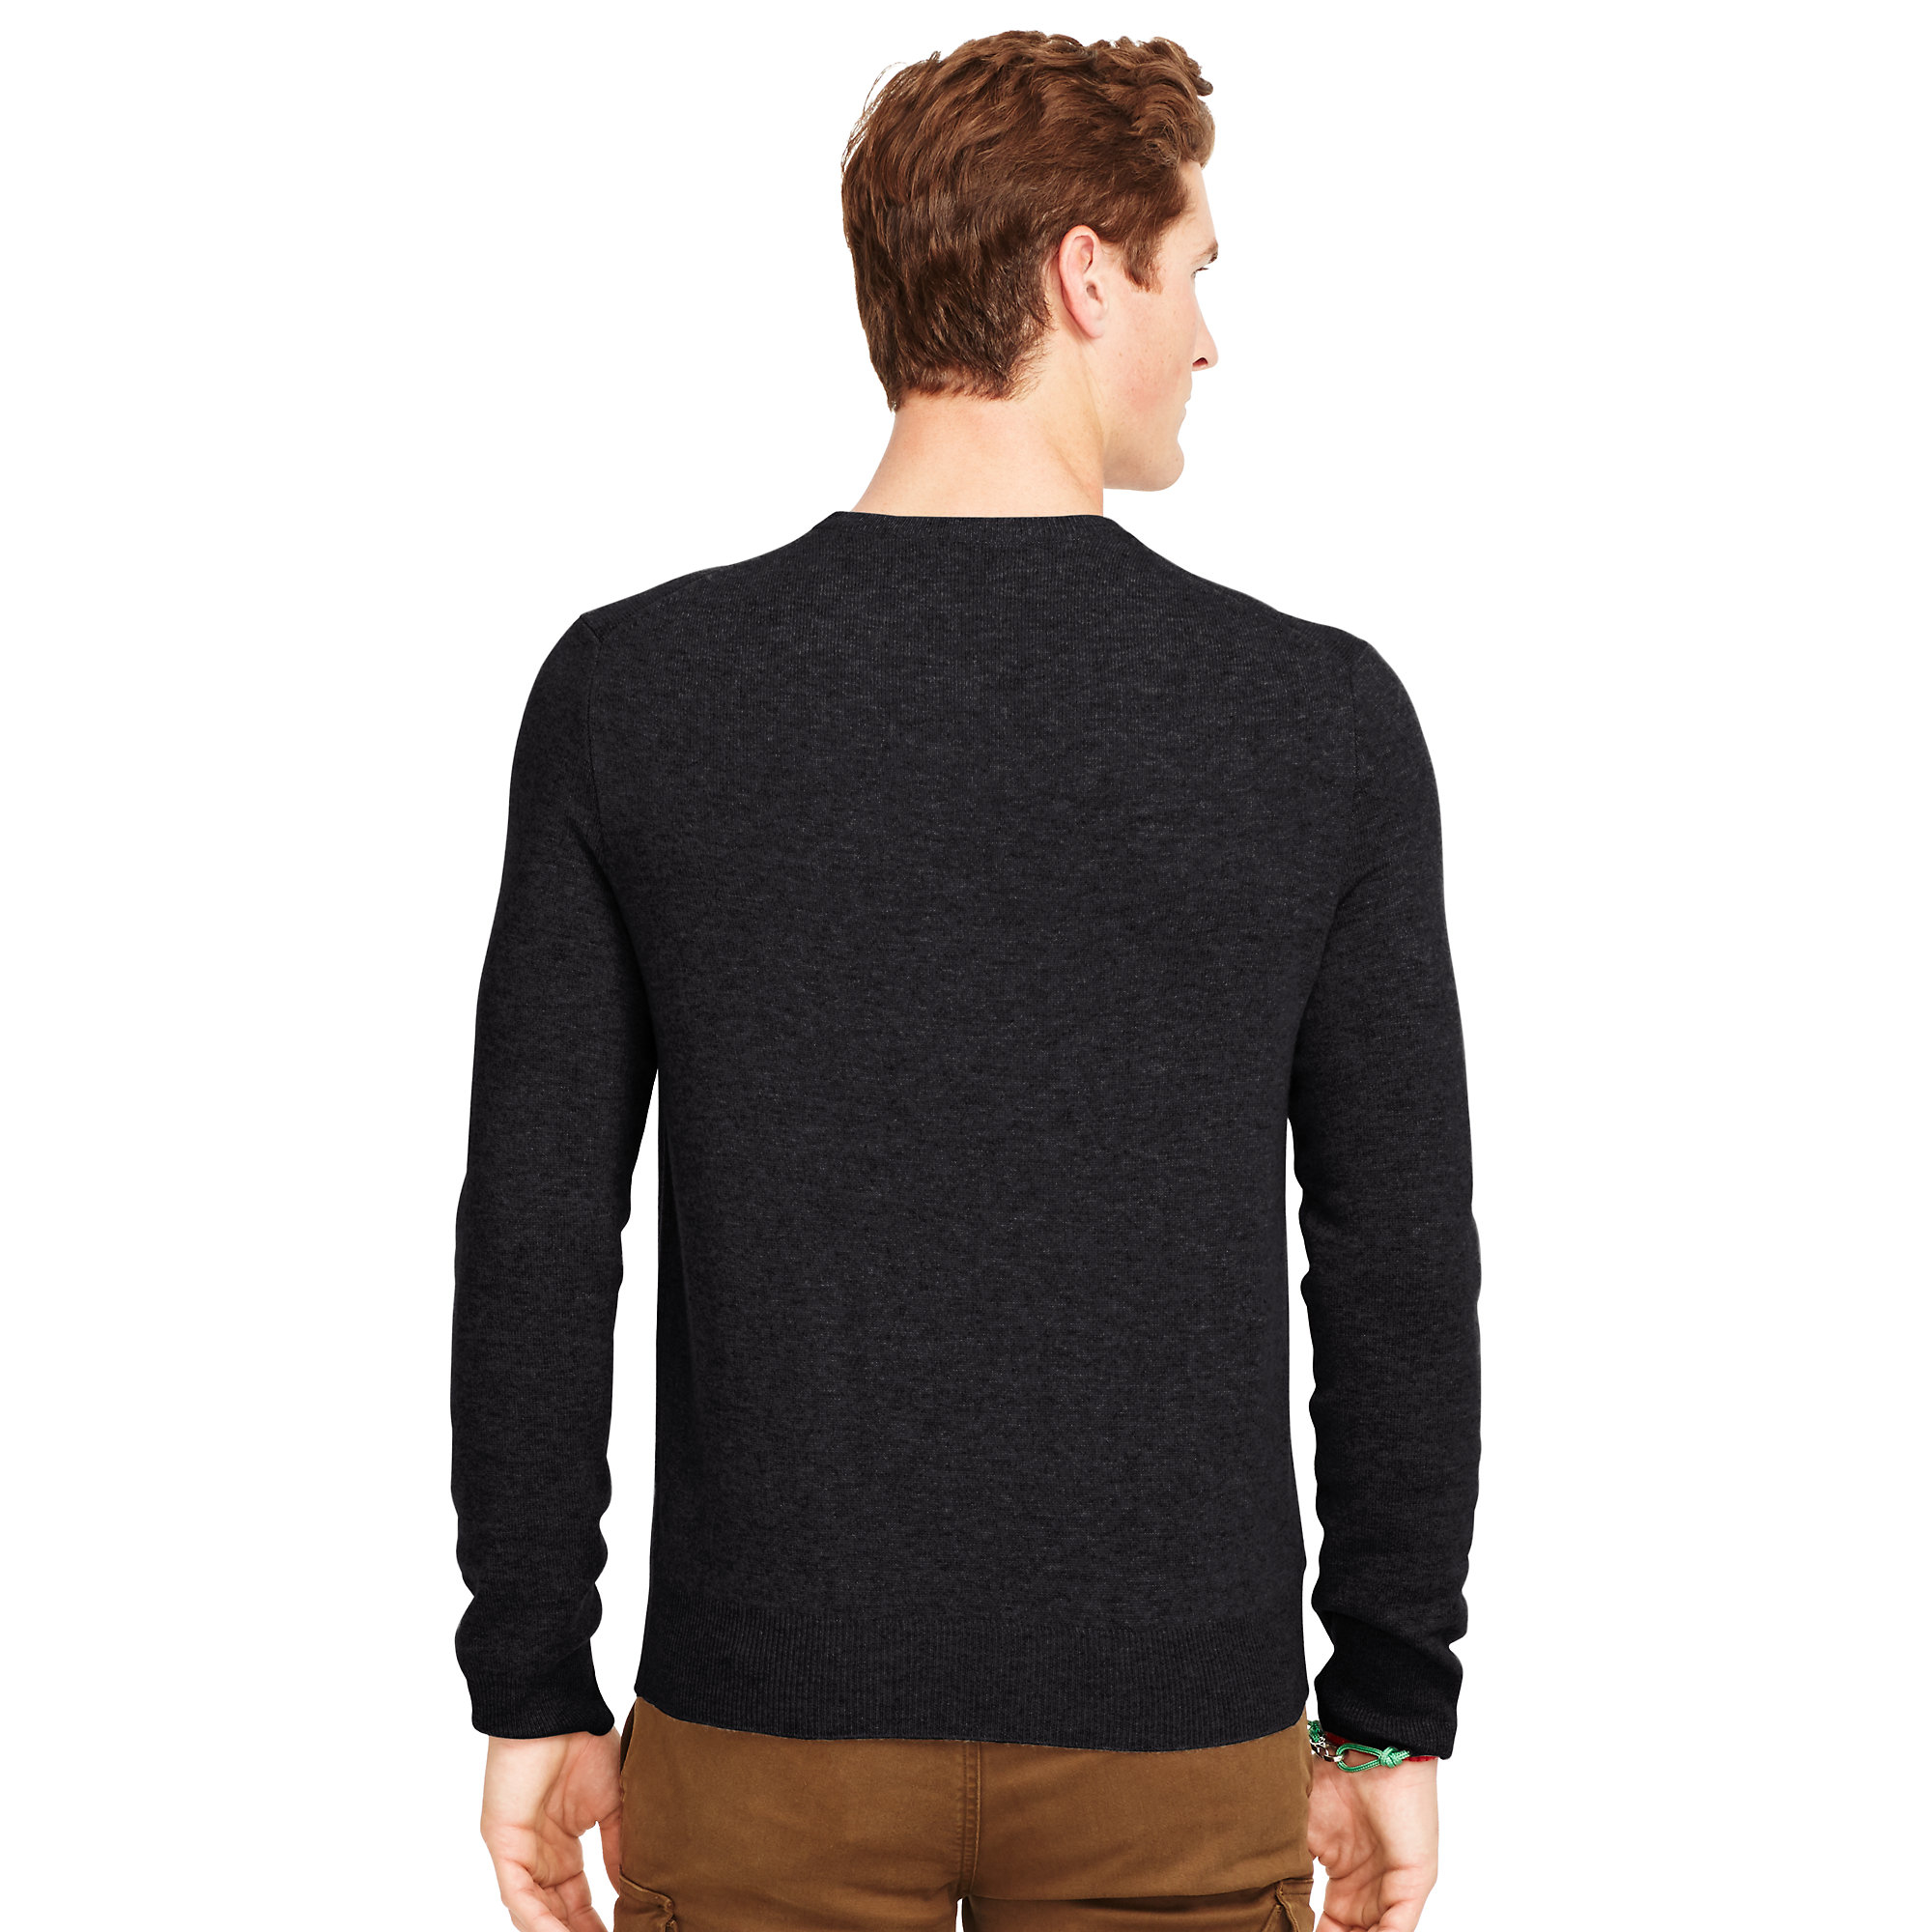 Lyst Polo  Ralph Lauren Wool Crewneck  Sweater in Black 